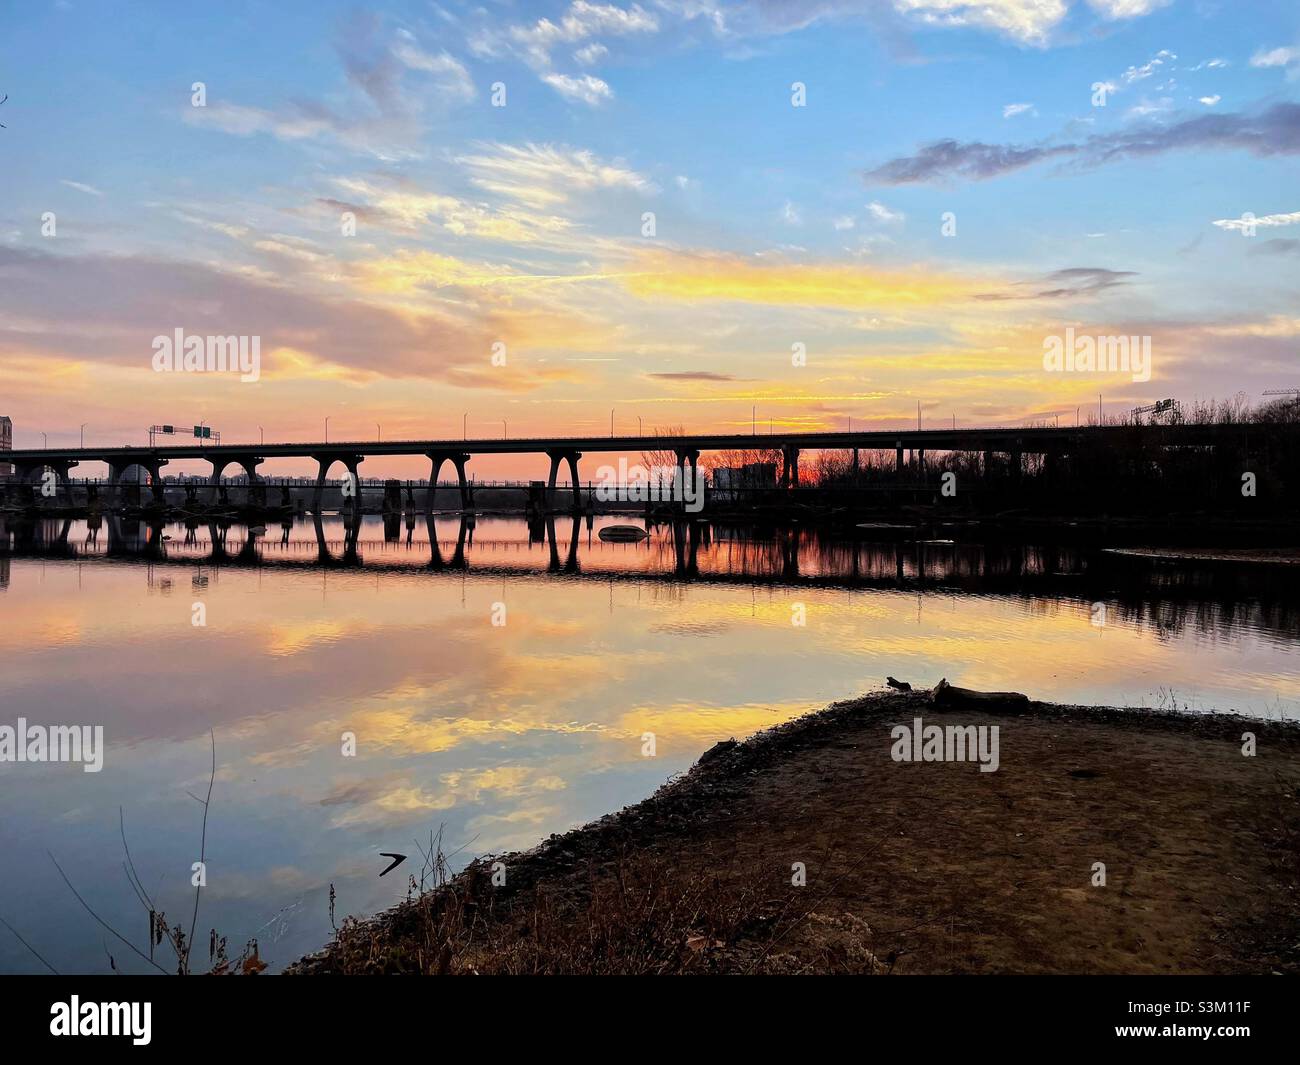 A bridge over the river at sunrise. Stock Photo